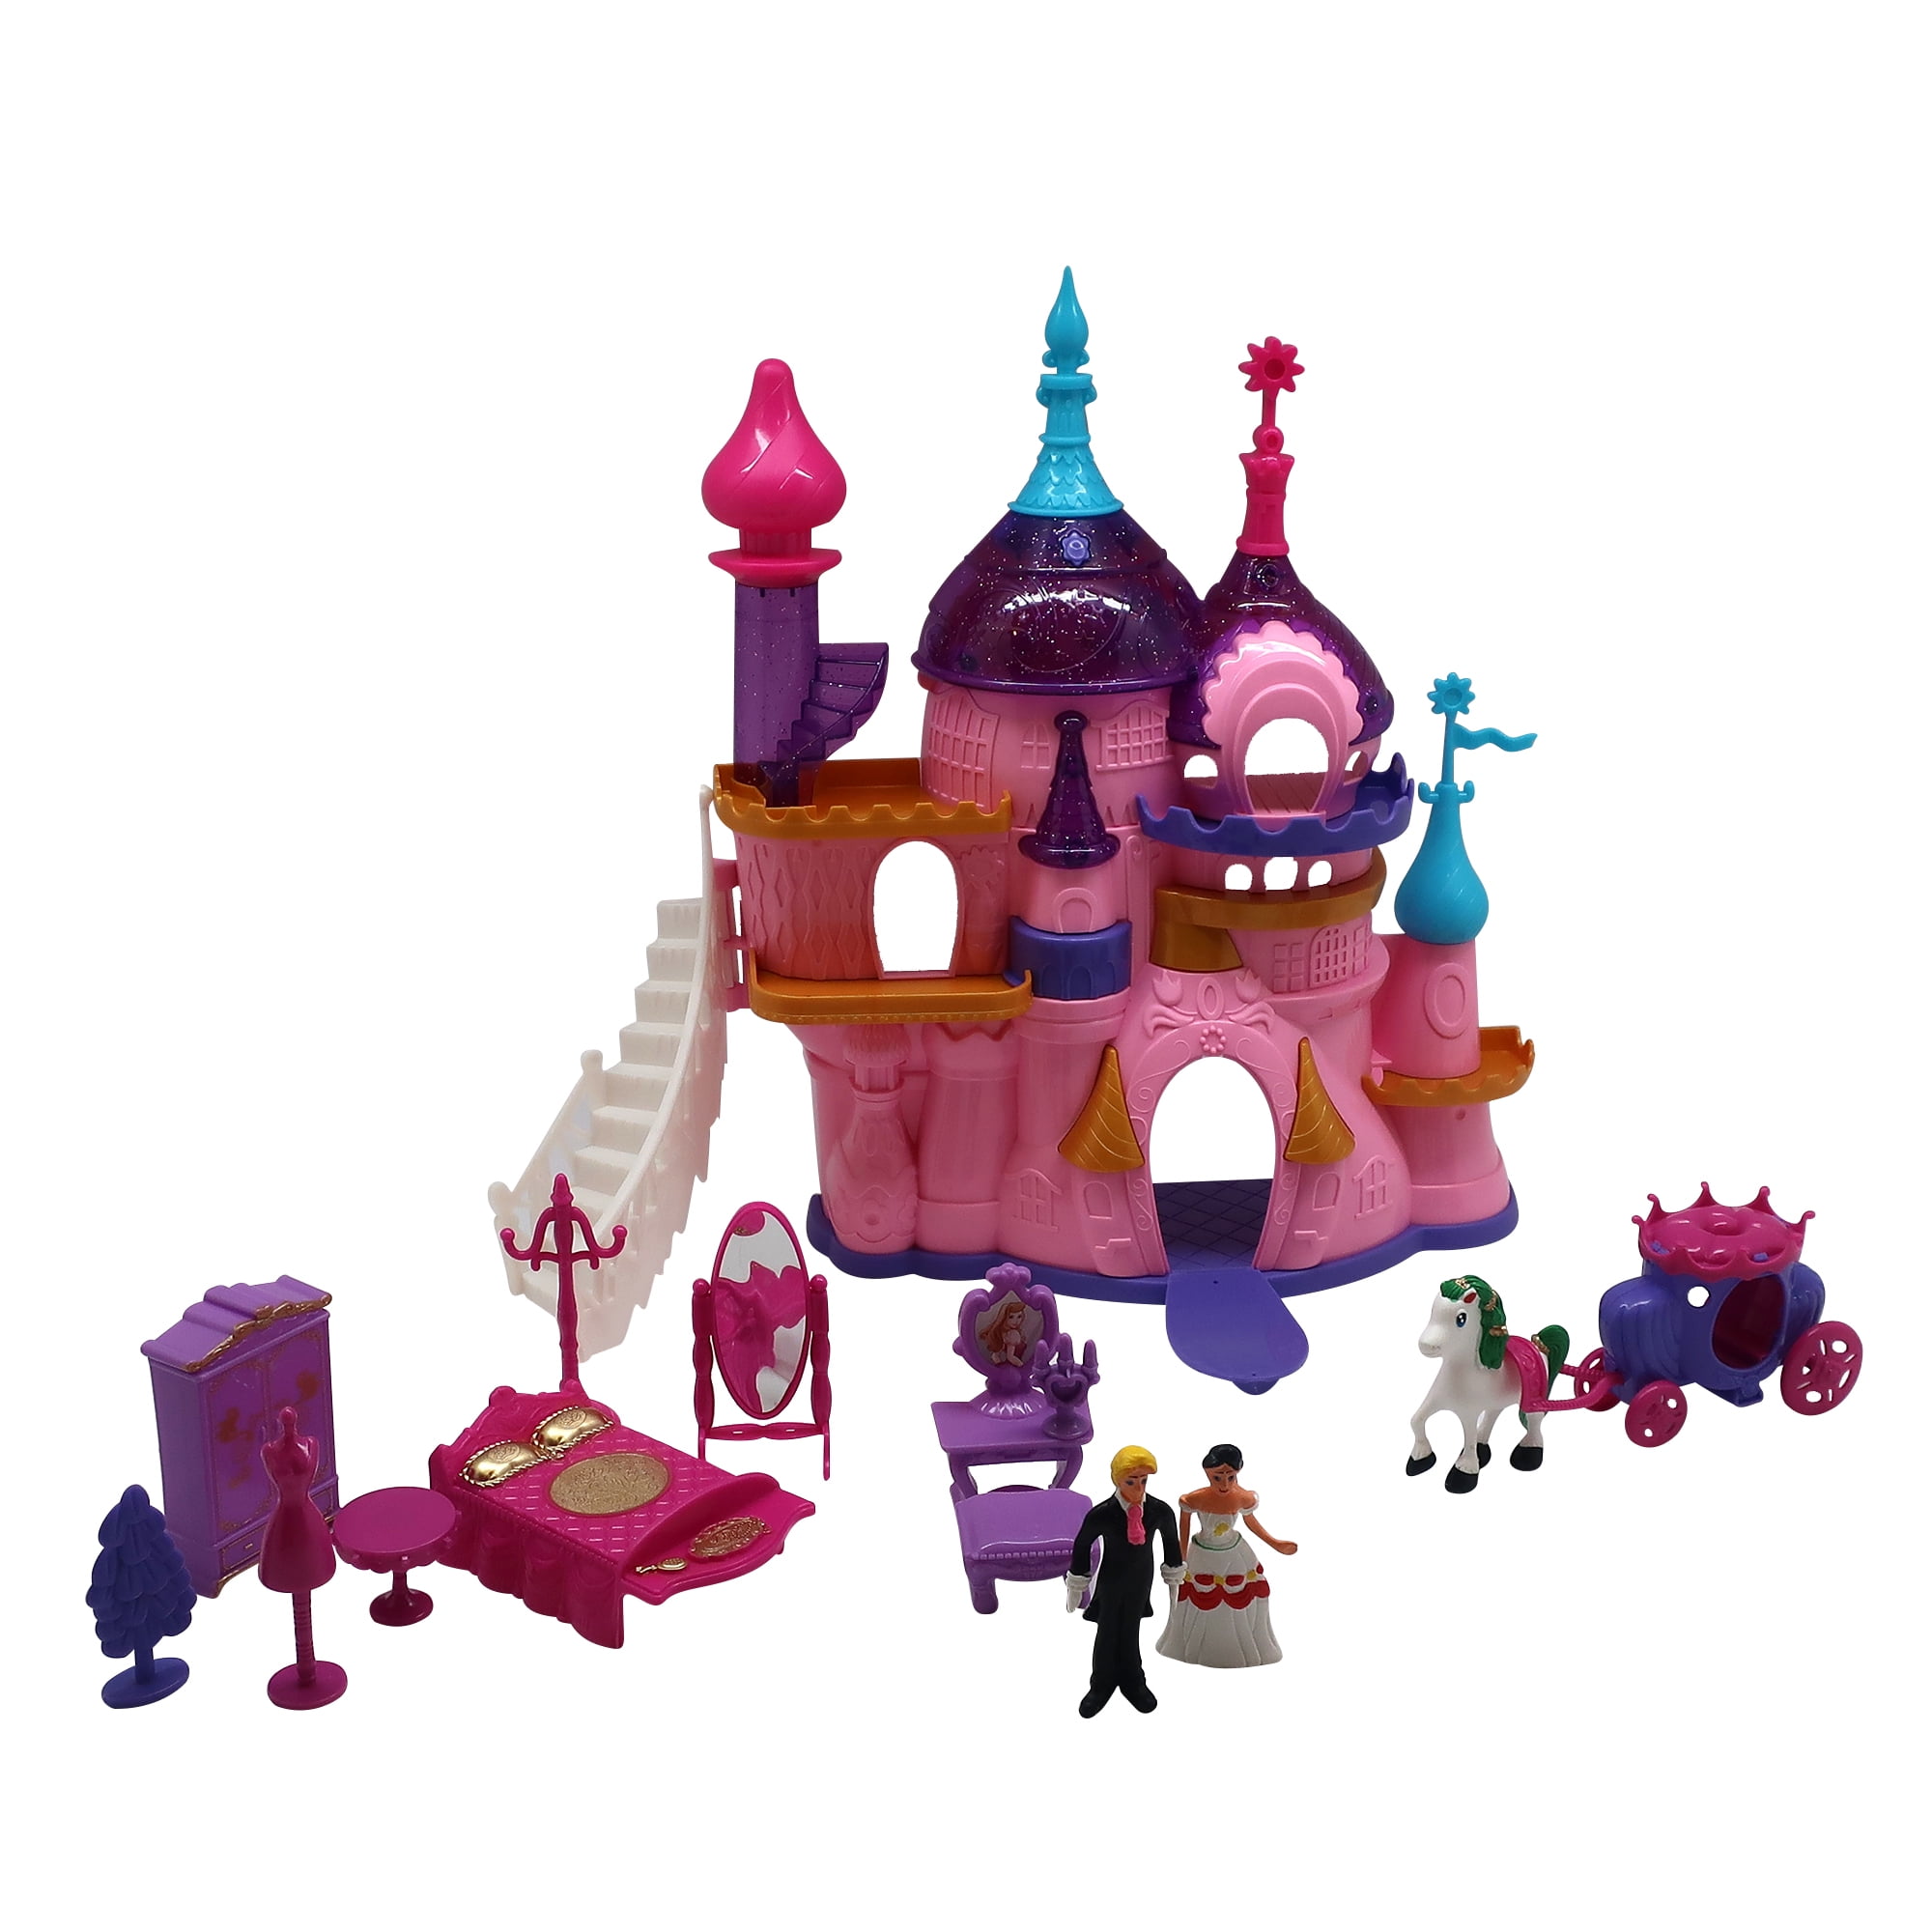 Playtive junior castle - Toys for kids - 111301523